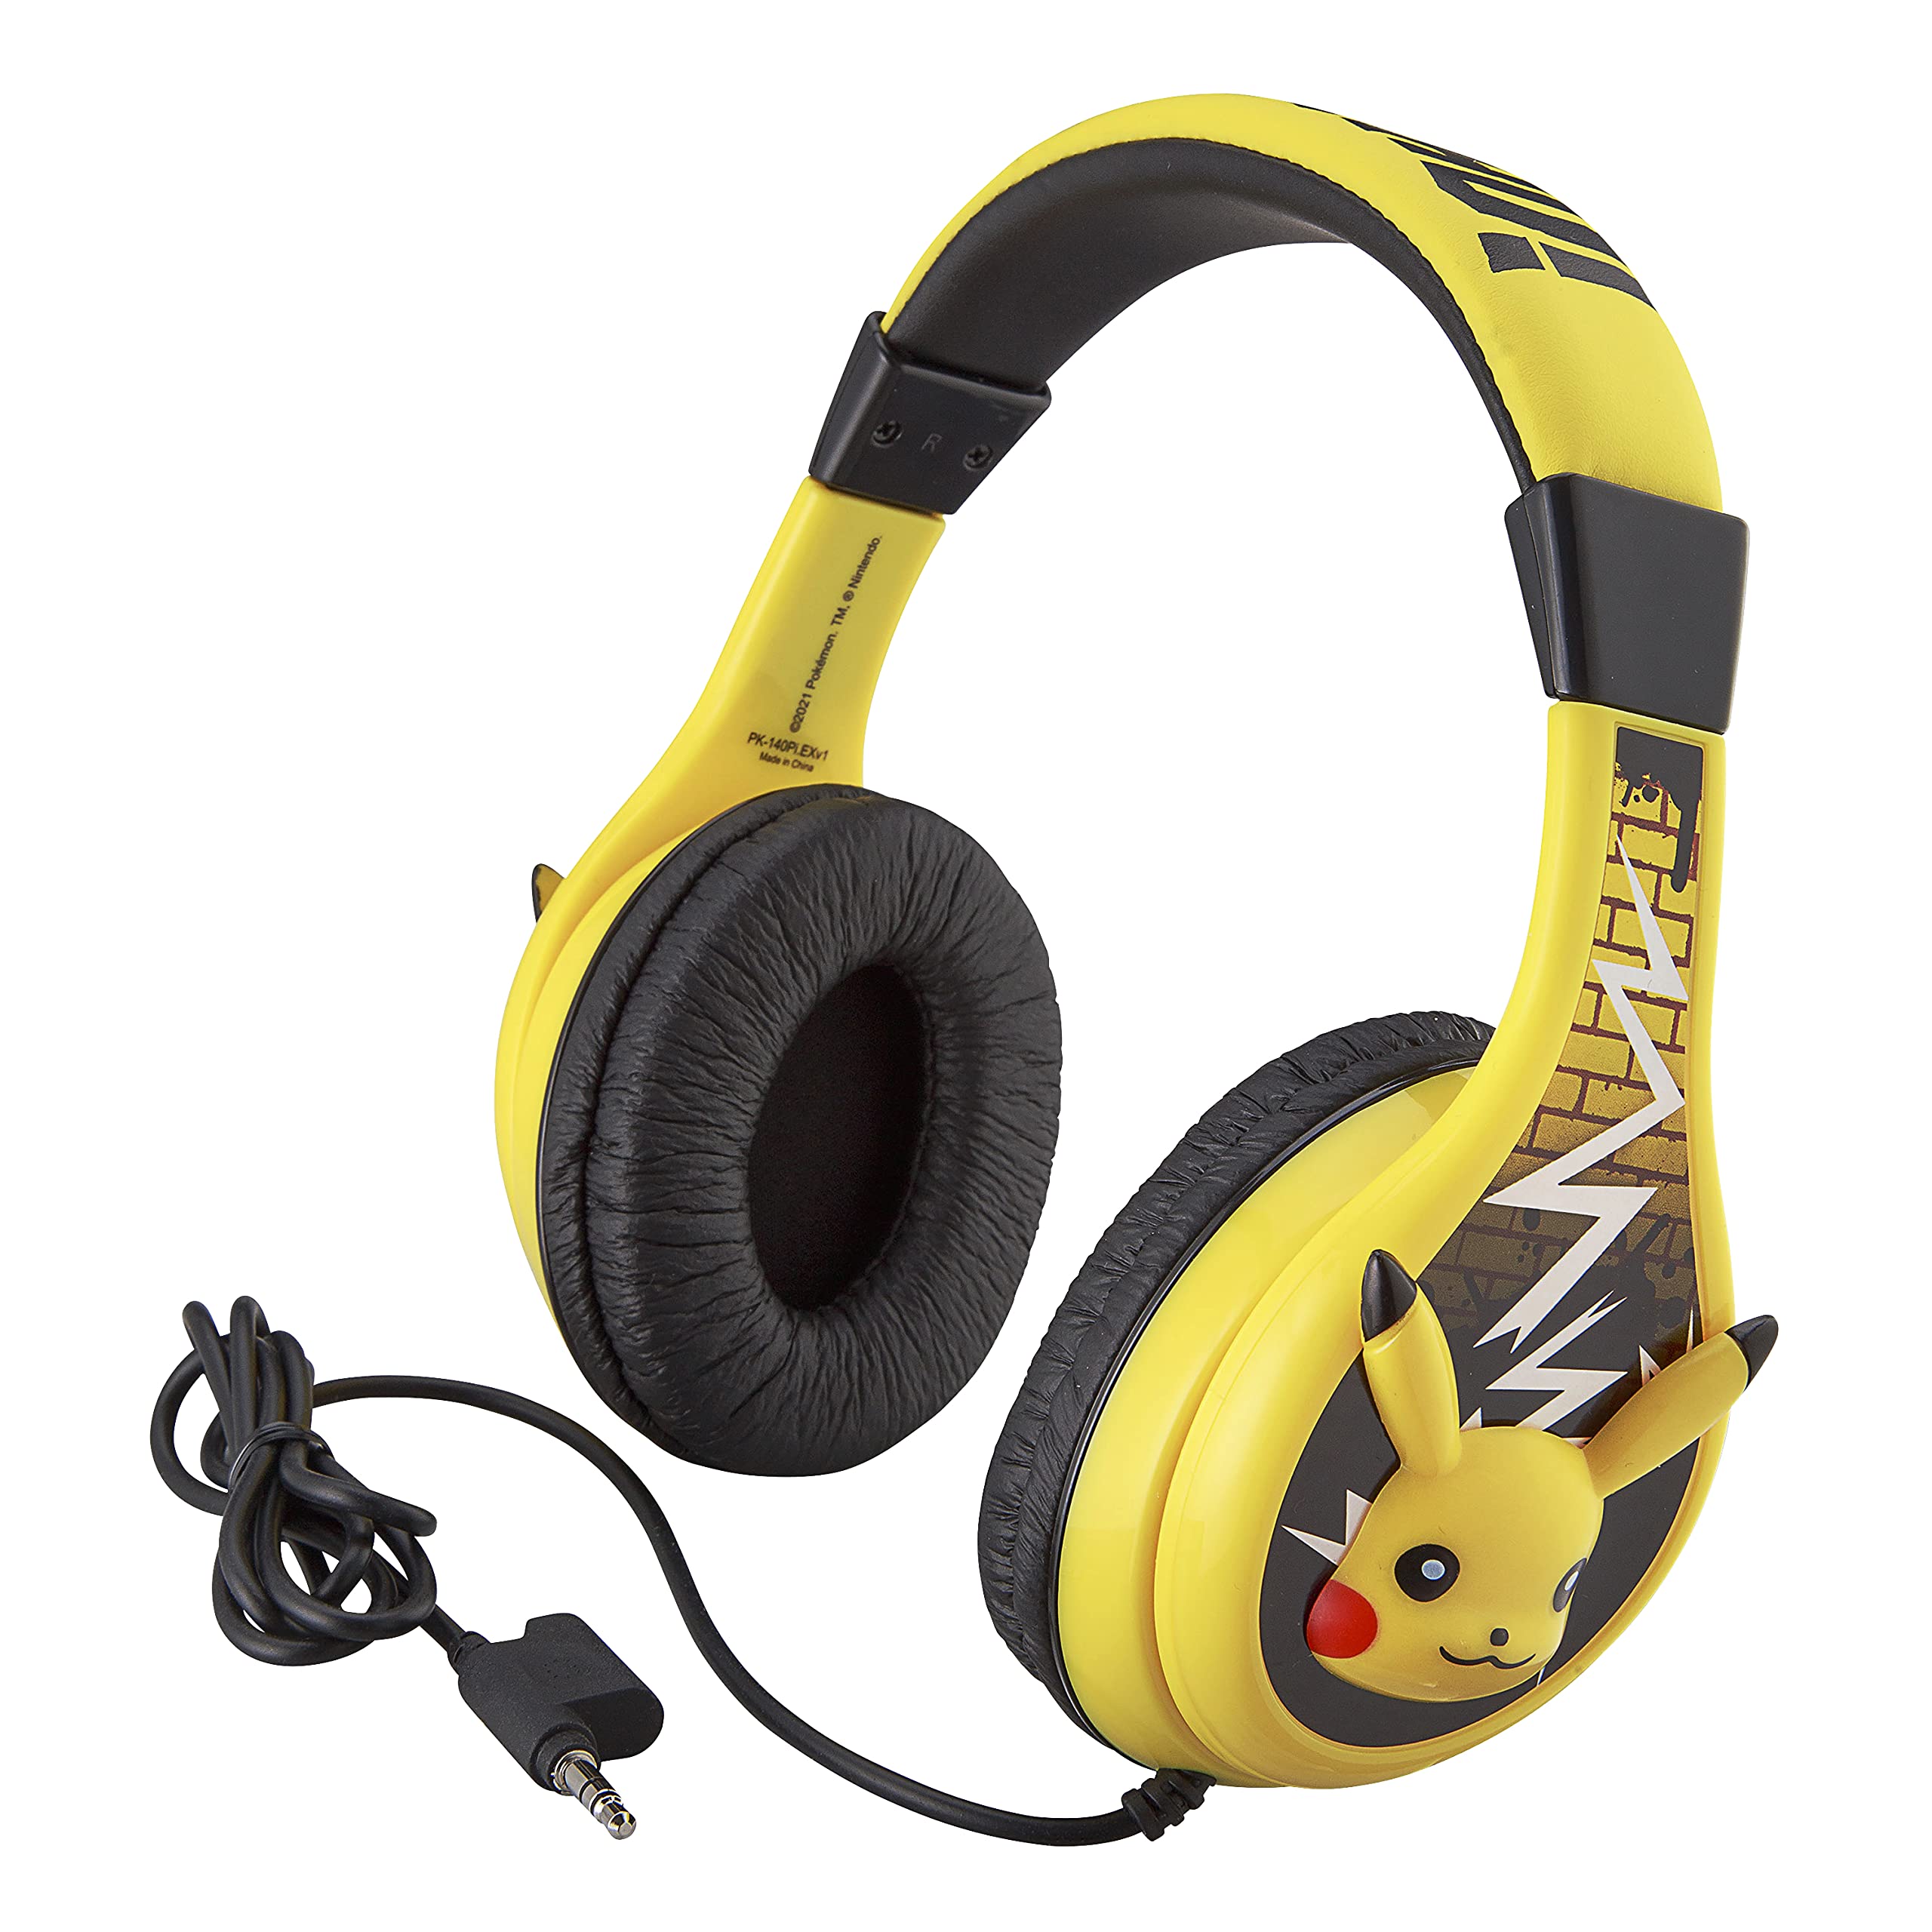 eKids Pokemon Pikachu Kids Headphones, Adjustable Headband, Stereo Sound, 3.5Mm Jack, Wired Headphones for Kids, Tangle-Free, Volume Control, Children's Headphones On Ear for School Home, Travel